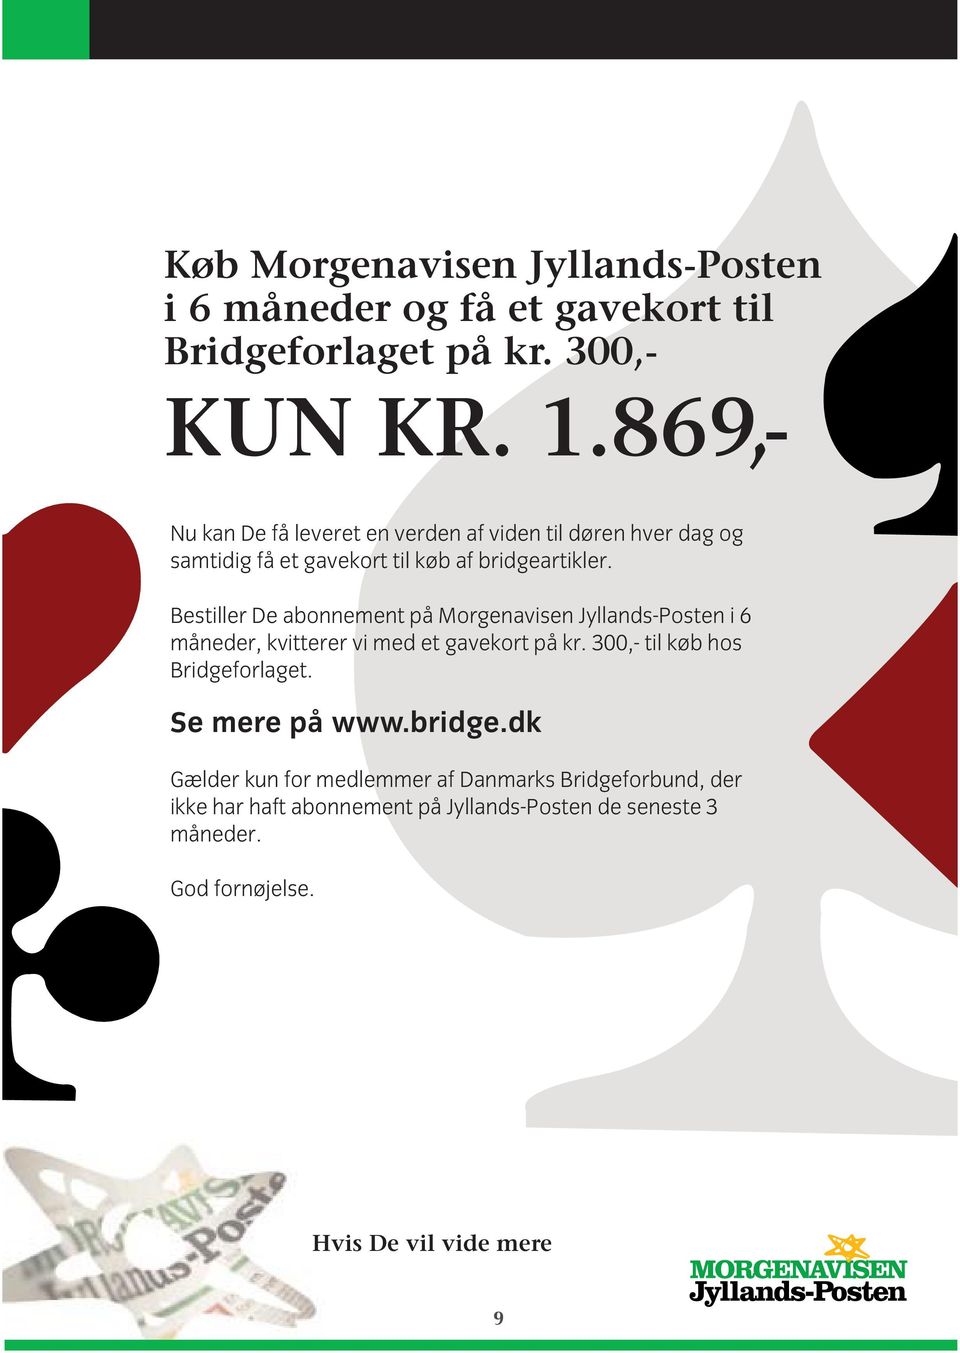 Bestiller De abonnement på Morgenavisen Jyllands-Posten i 6 måneder, kvitterer vi med et gavekort på kr. 300,- til køb hos Bridgeforlaget.